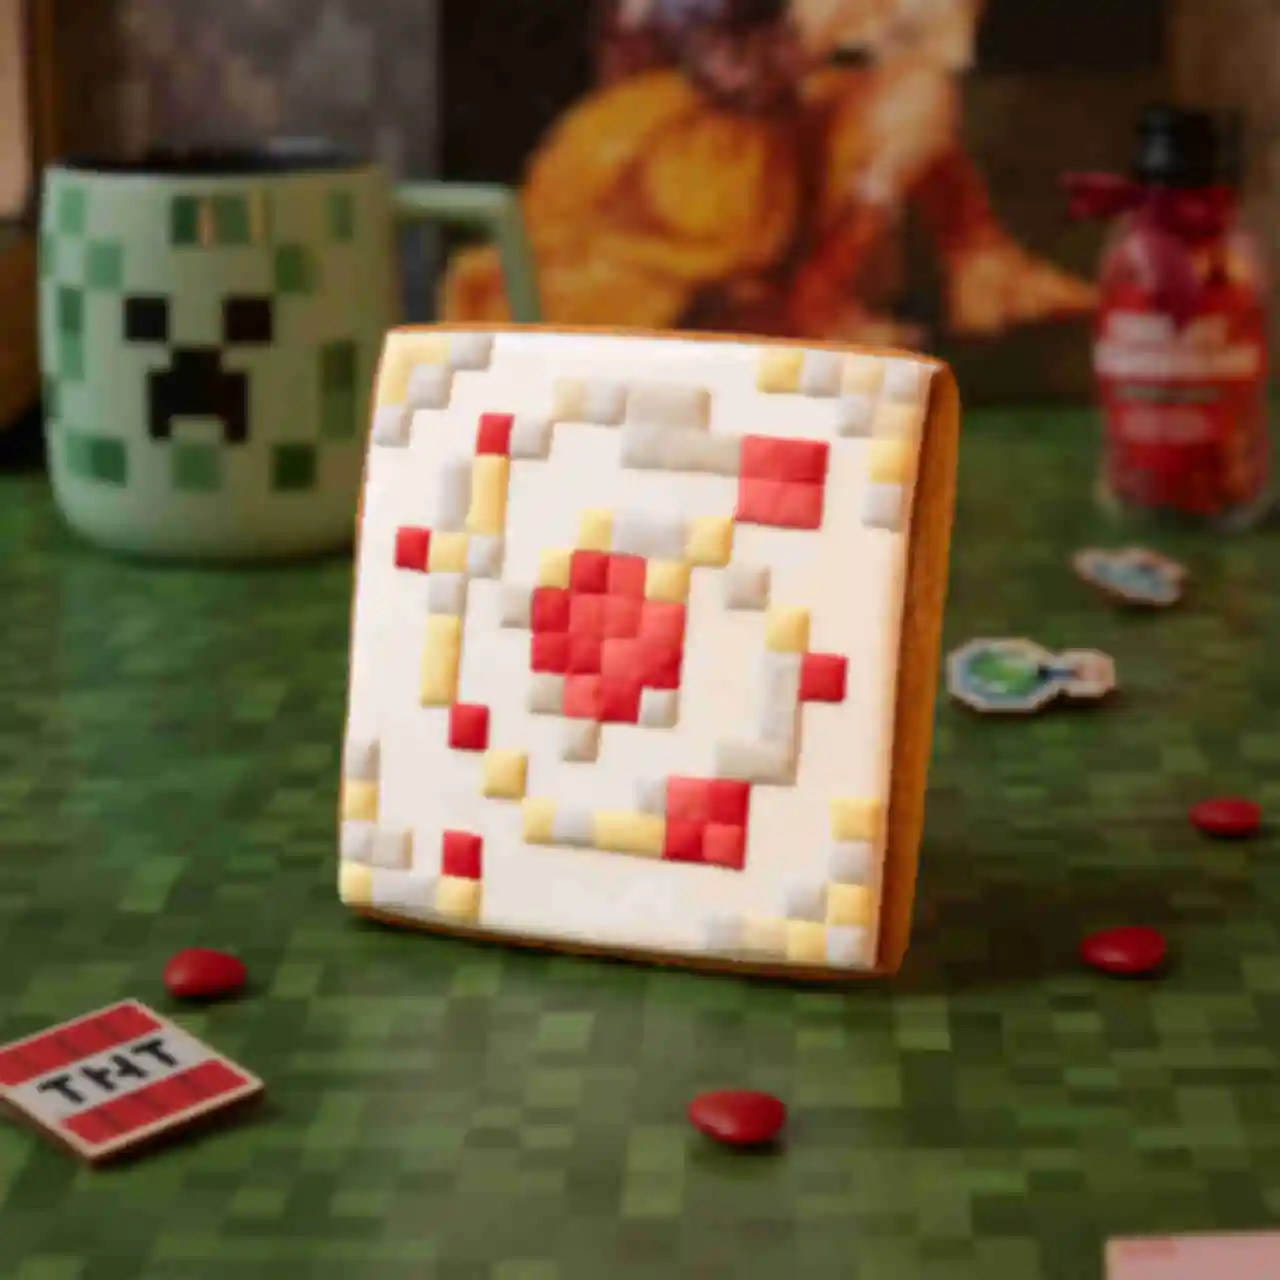 Пряник Тортик ⦁ Їжа в стилі гри Майнкрафт ⦁ Подарунок геймеру та фанату MinecraftФото №1